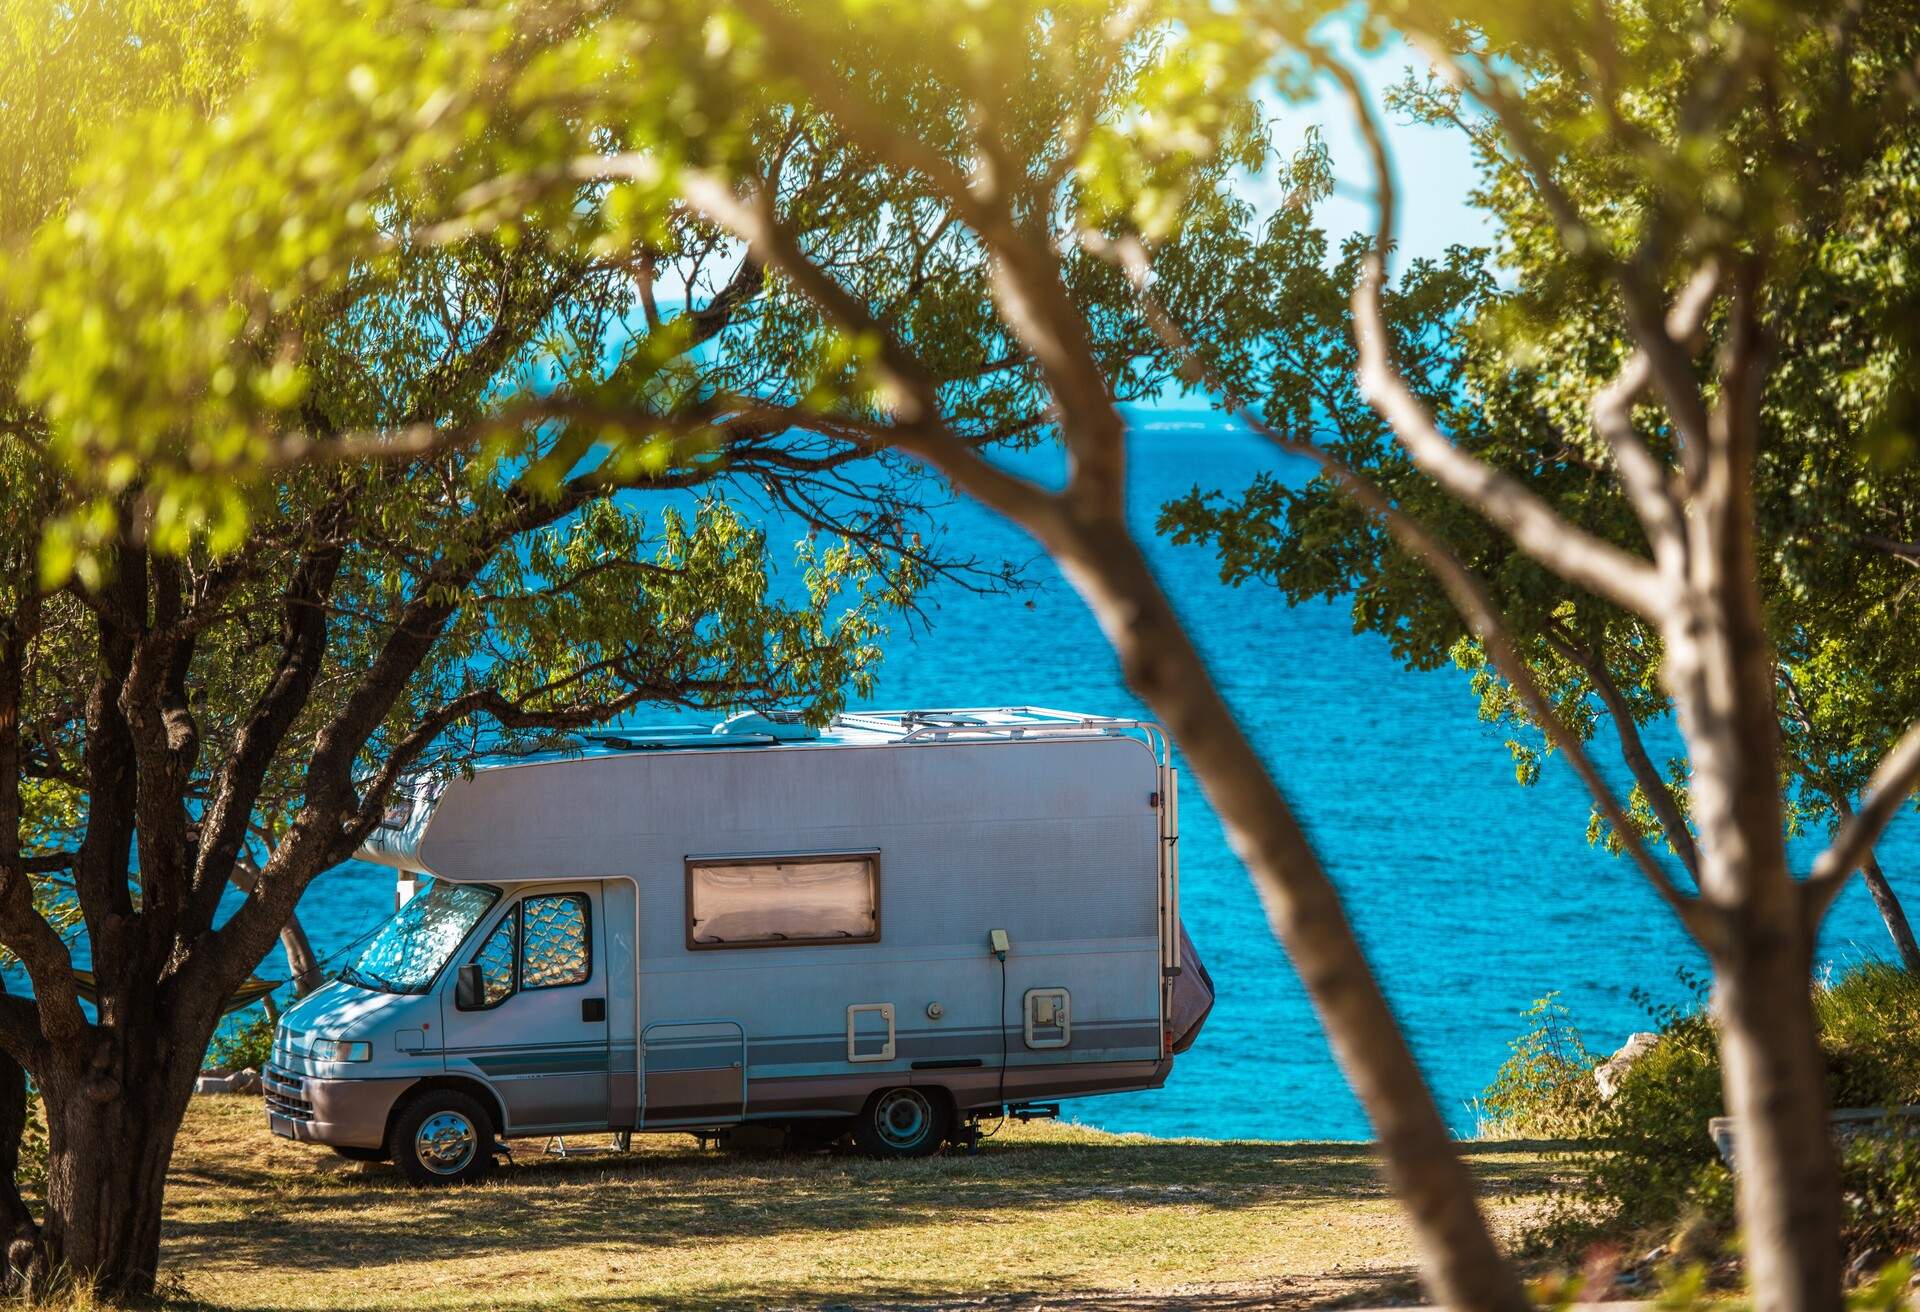 Sea Front RV Camping Spot. Summer Recreational Vehicle Camper Van Road Trip. Croatian Landscape.